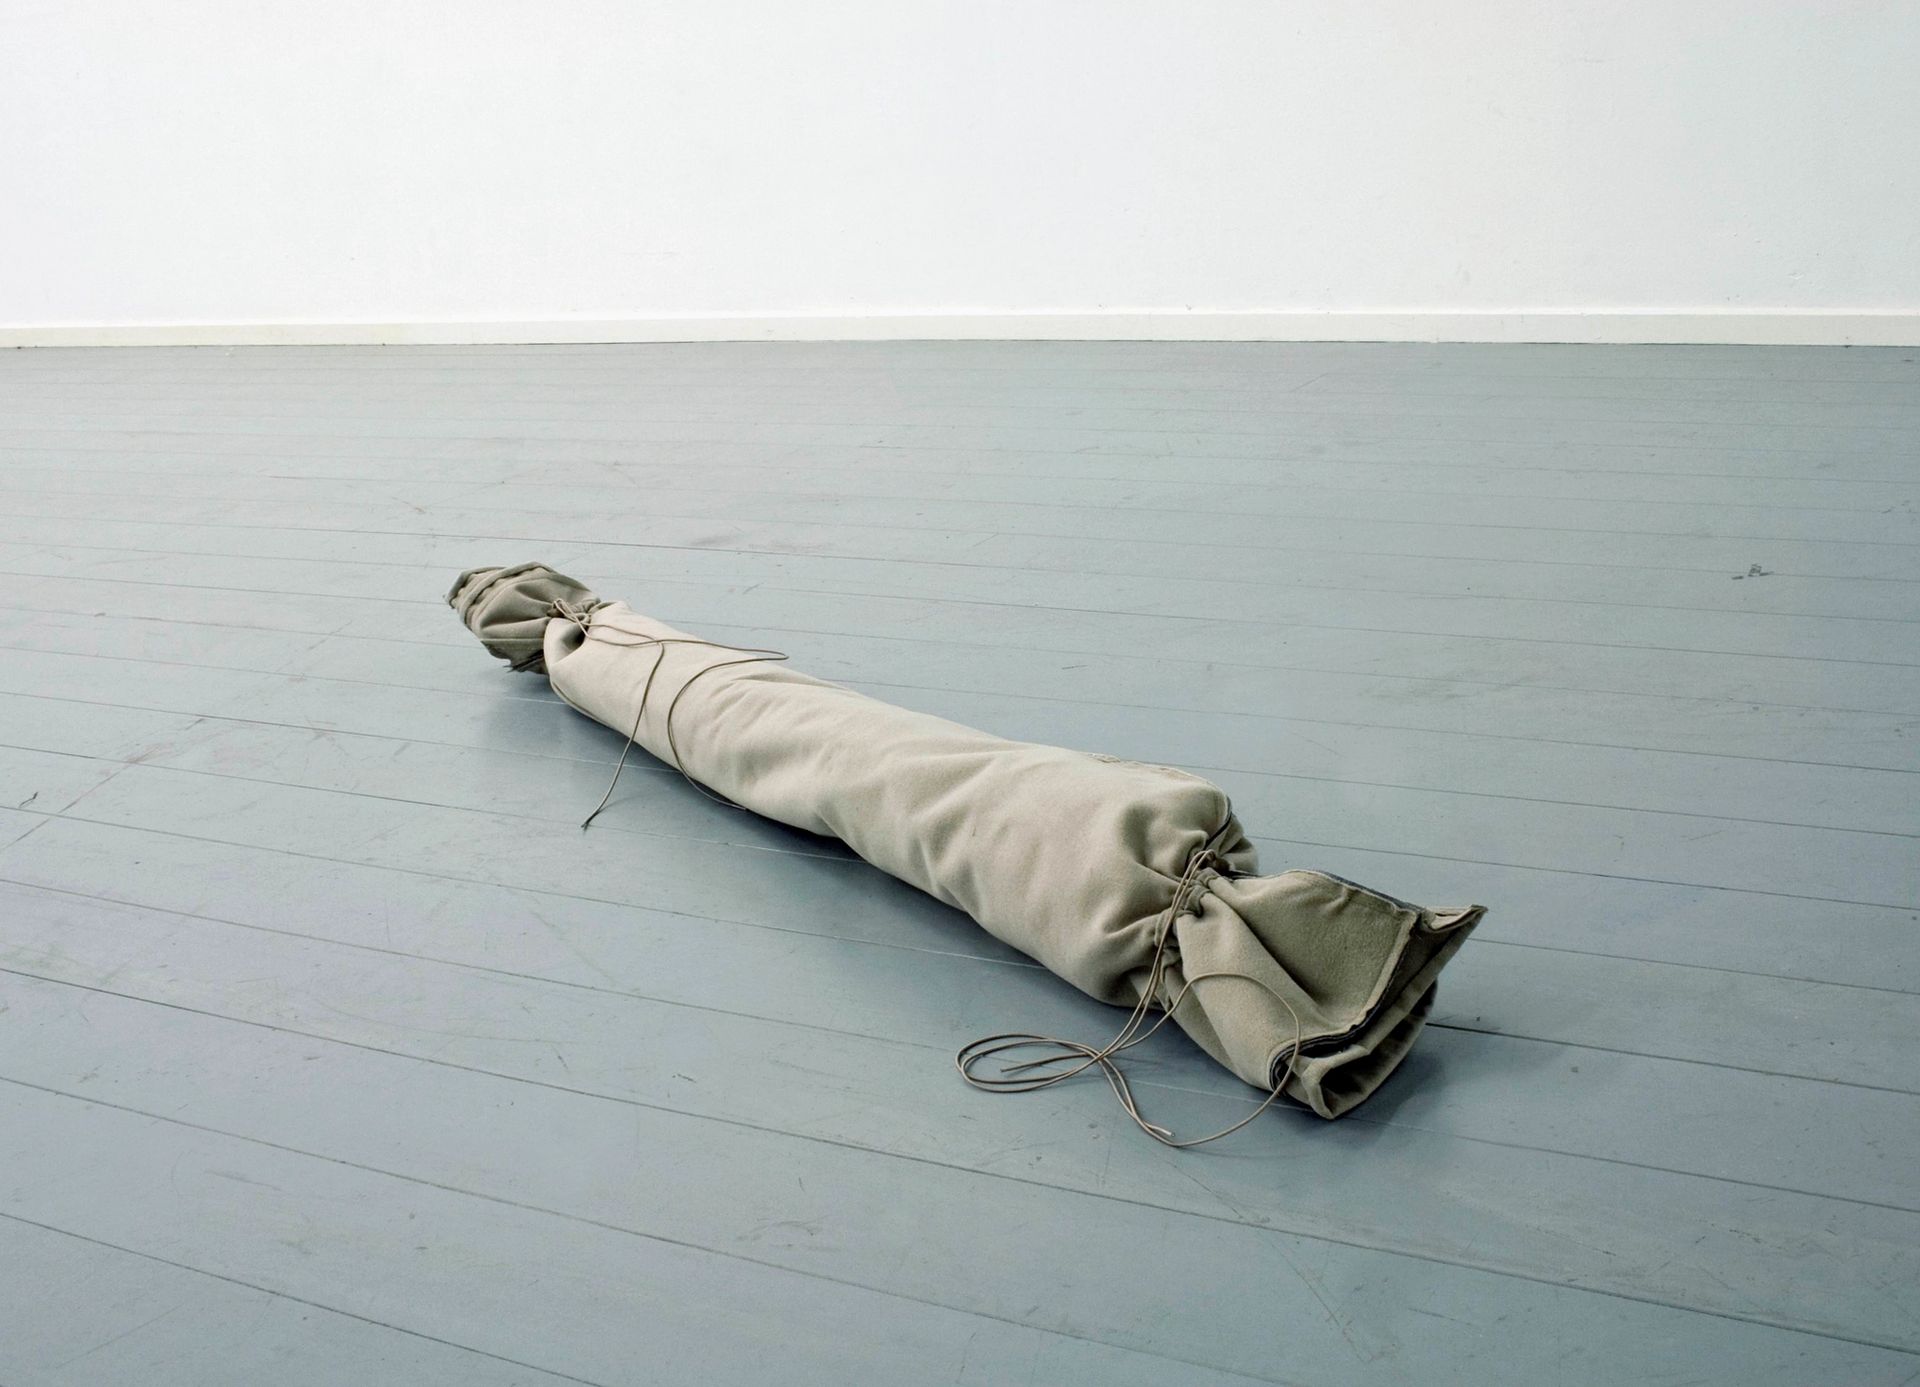 Ana Navas, Etui, 2014, bronze sculpture, fake leather, fabric, 150 × 19 cm (sculpture), 150 × 220 cm (textile)